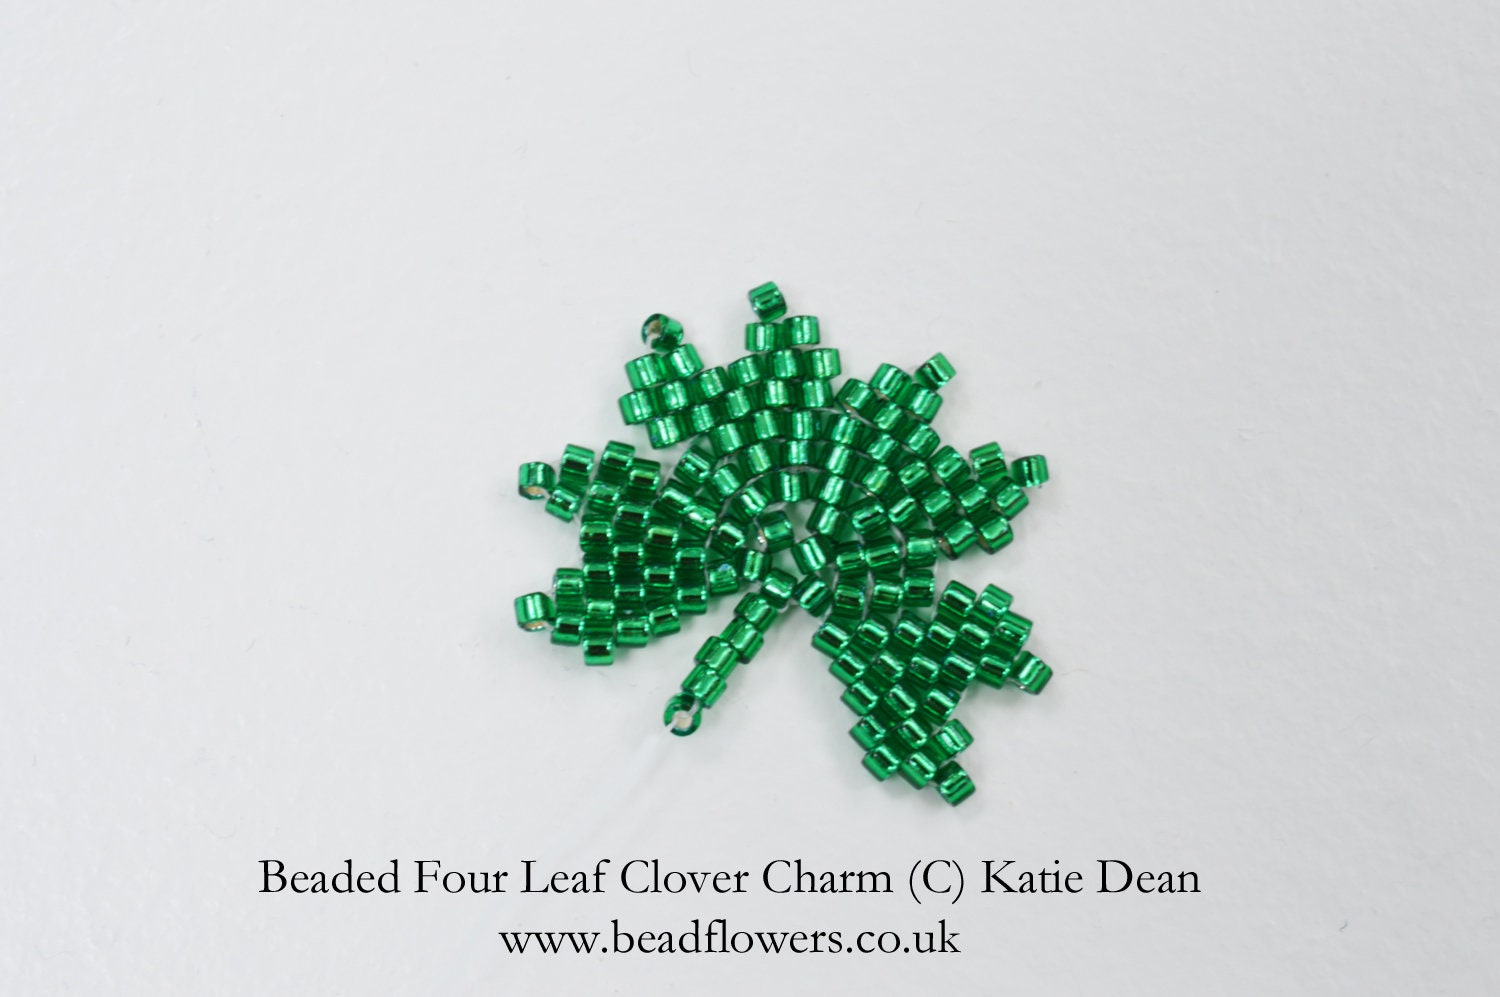 Cherry Blossom Beading Pattern for Pens - Katie Dean - Beadflowers